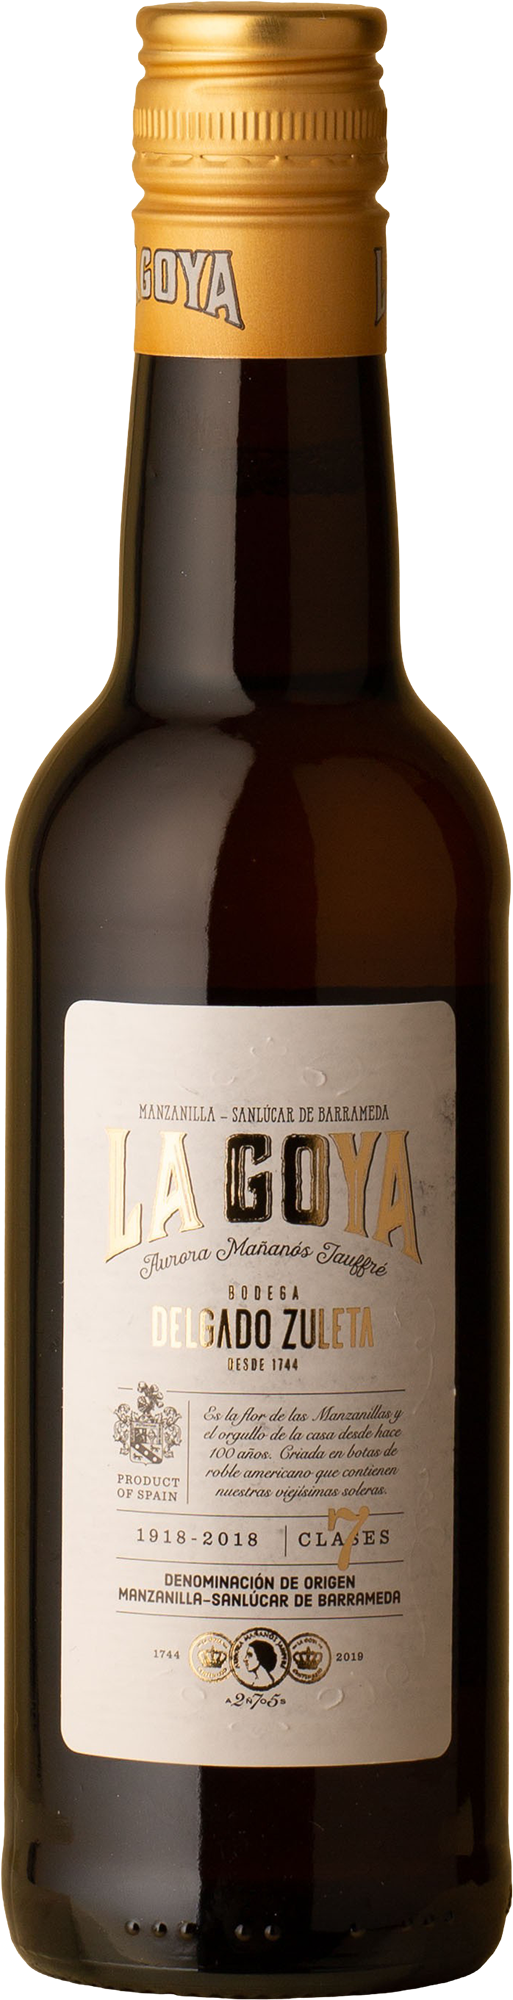 Delgado Zuleta - La Goya Manzanilla Sherry NV 375mL Not Wine